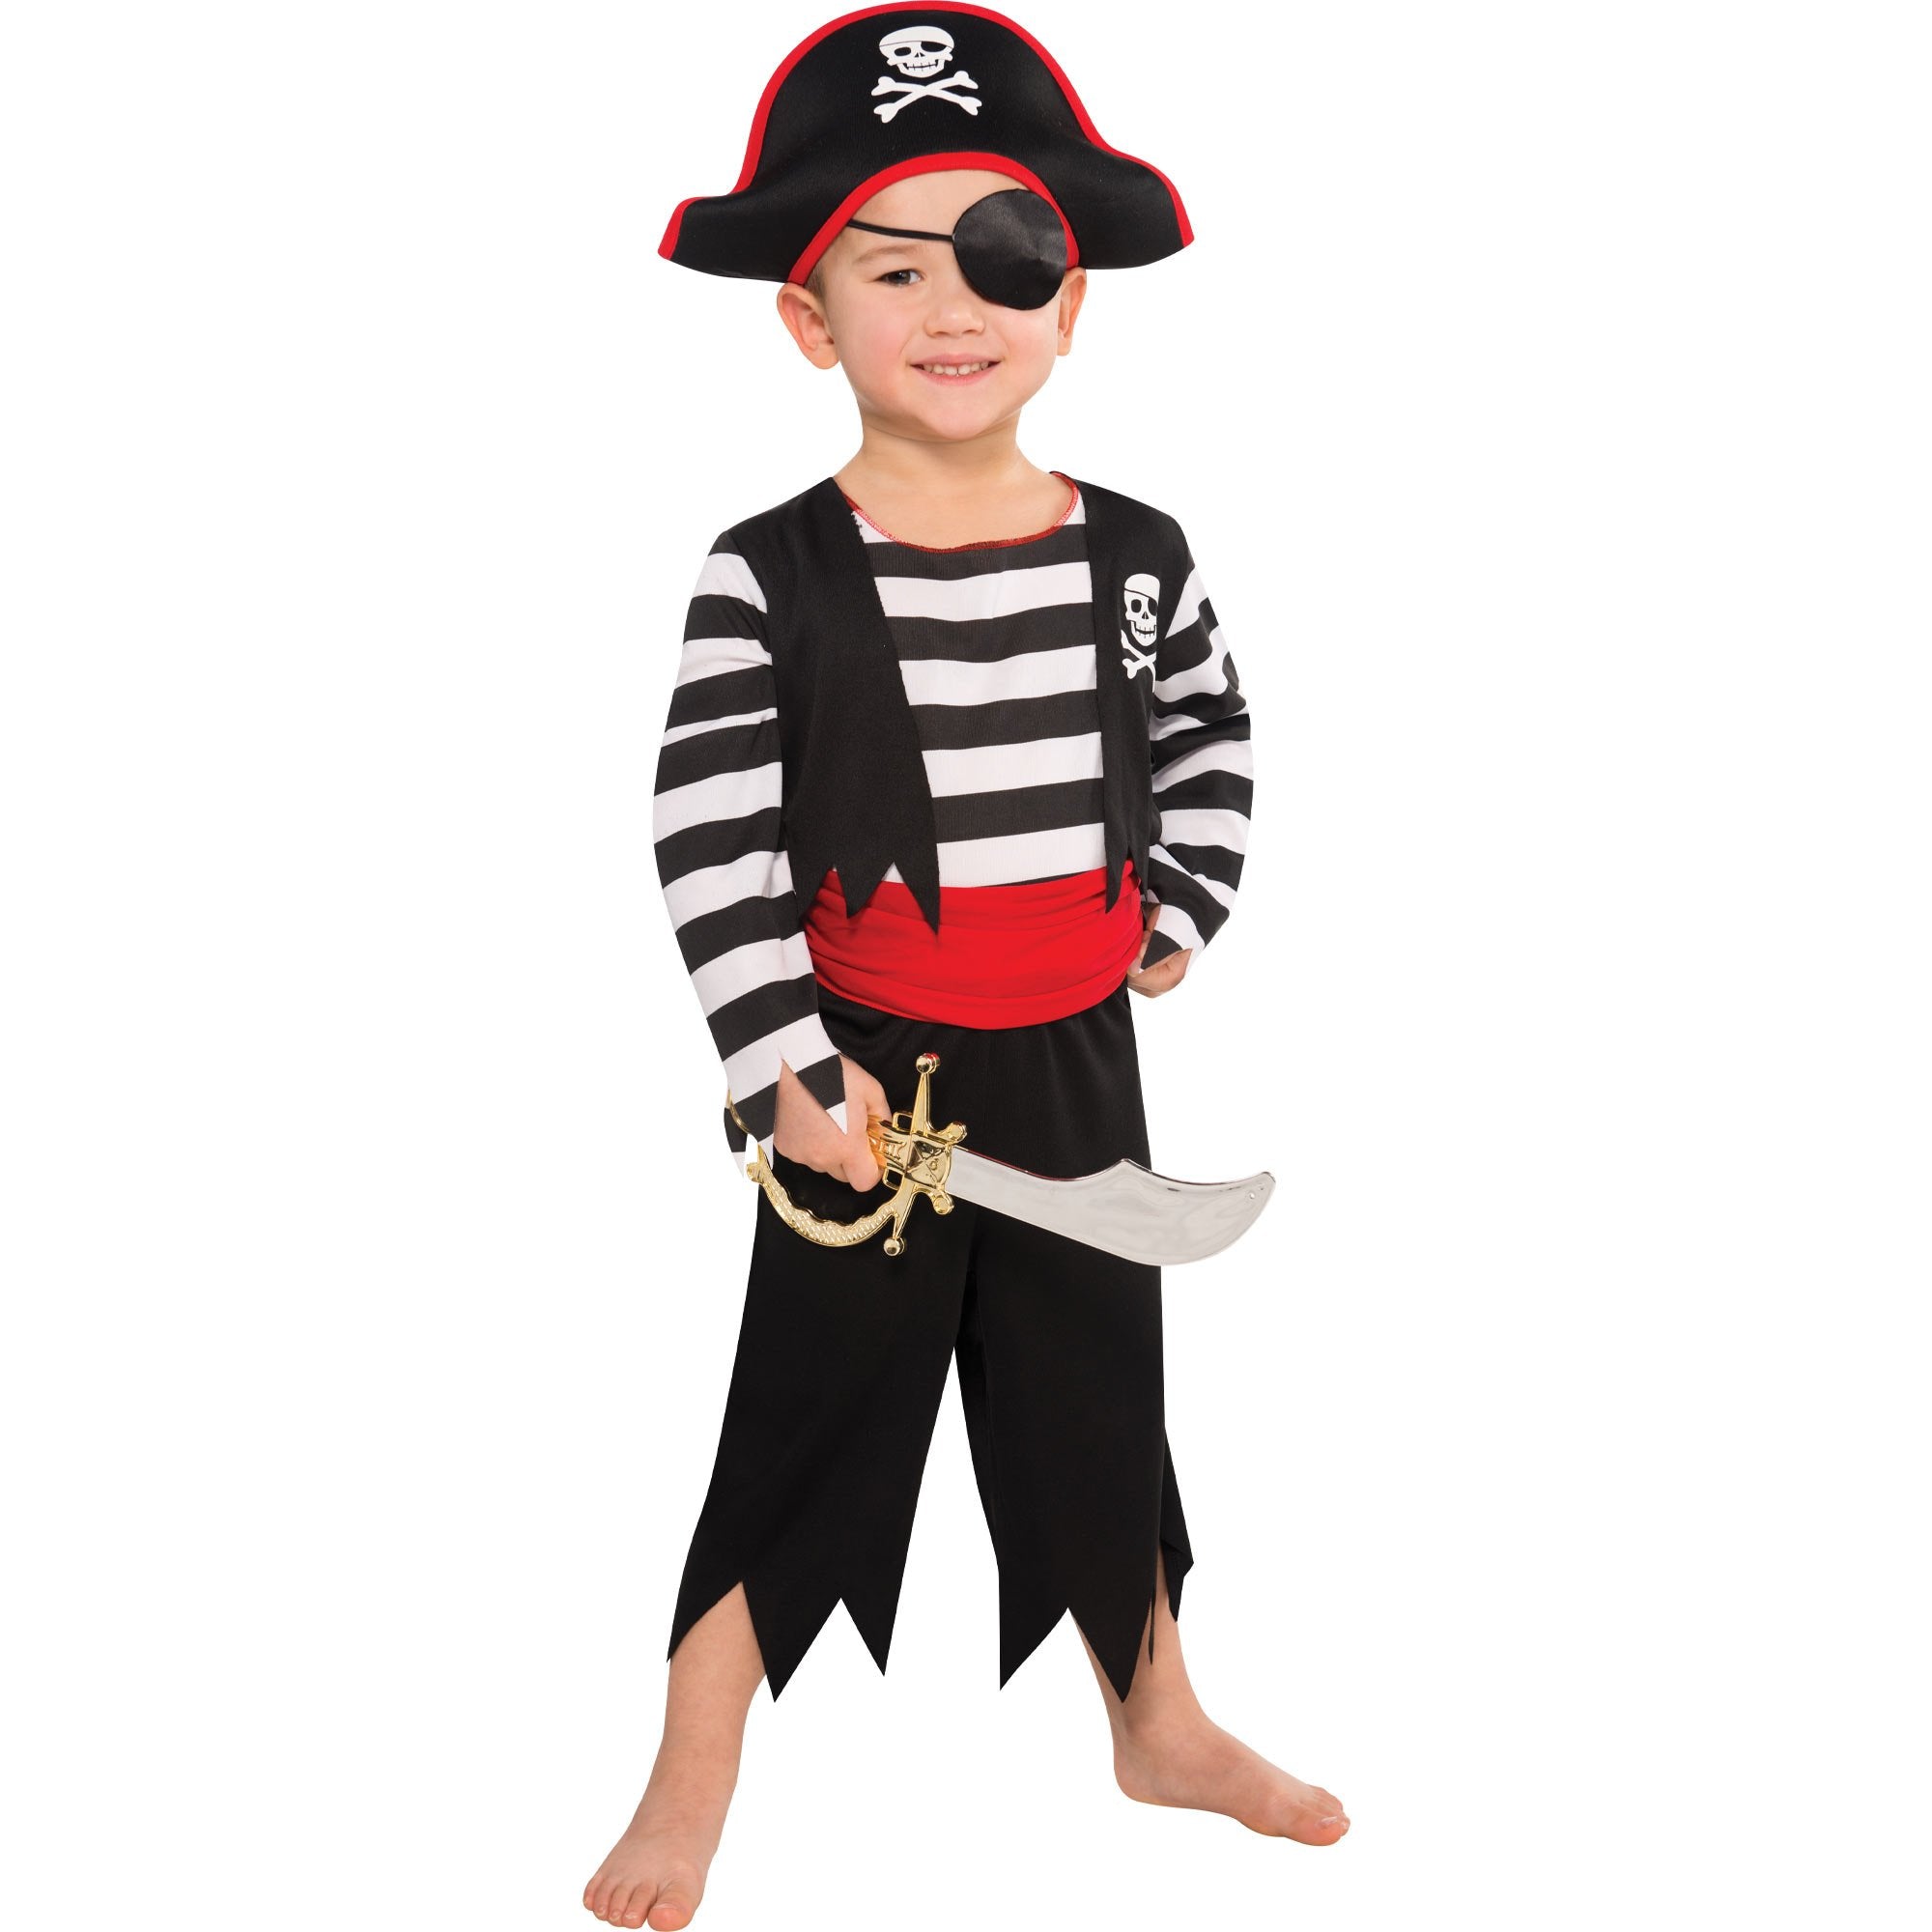 Costume Pirate Deckhand - Kids